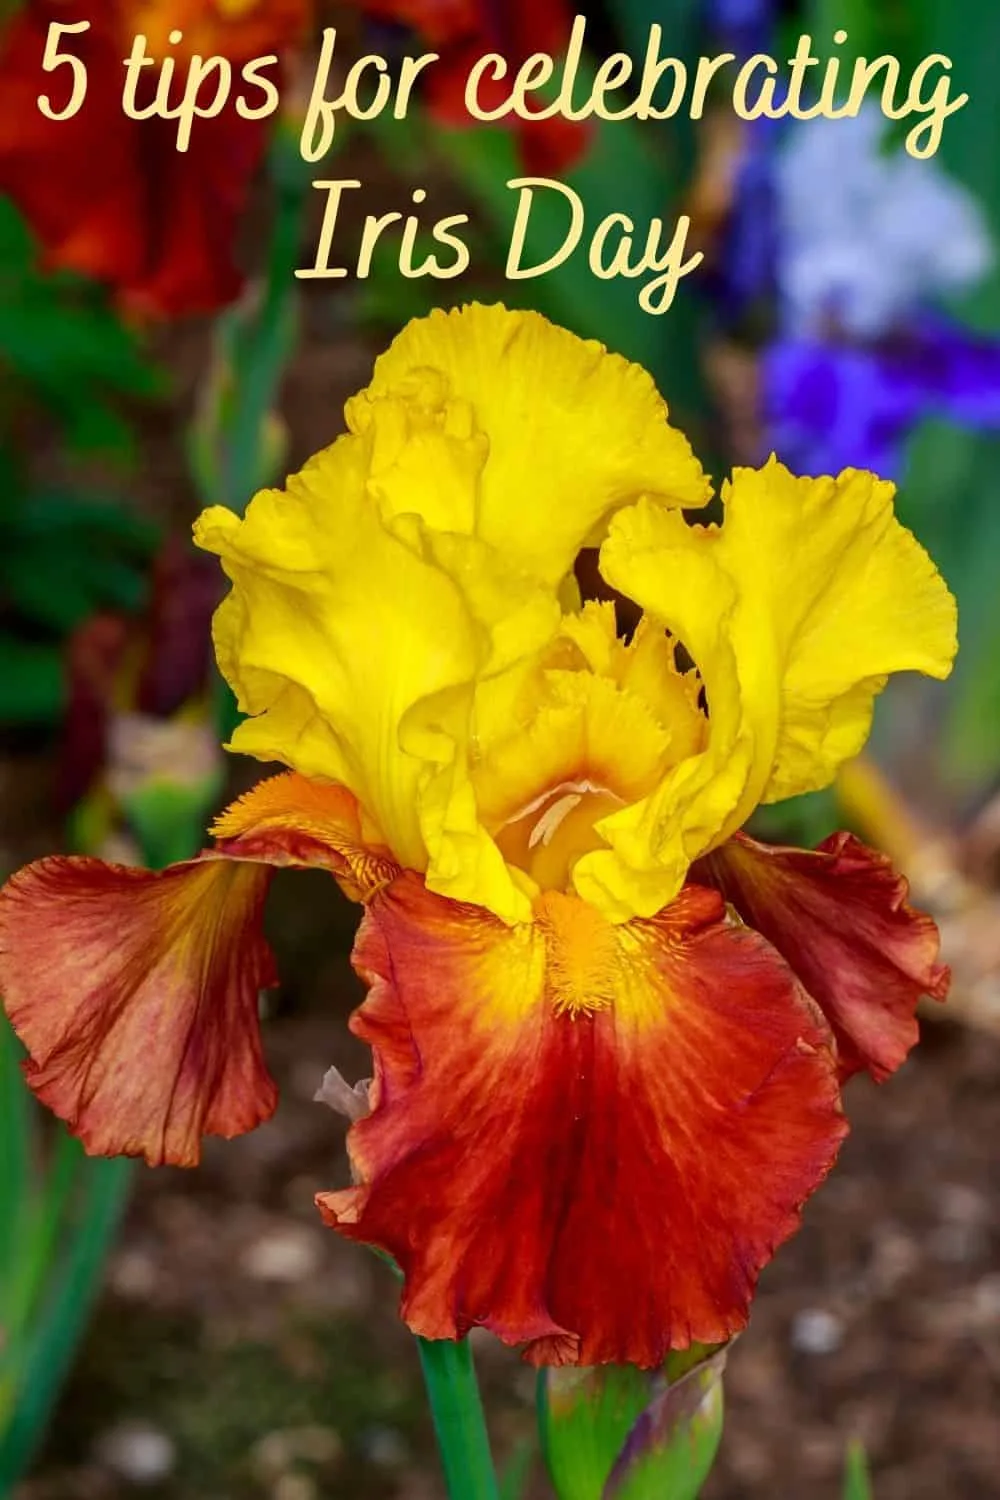 5 tips for celebrating Iris Day